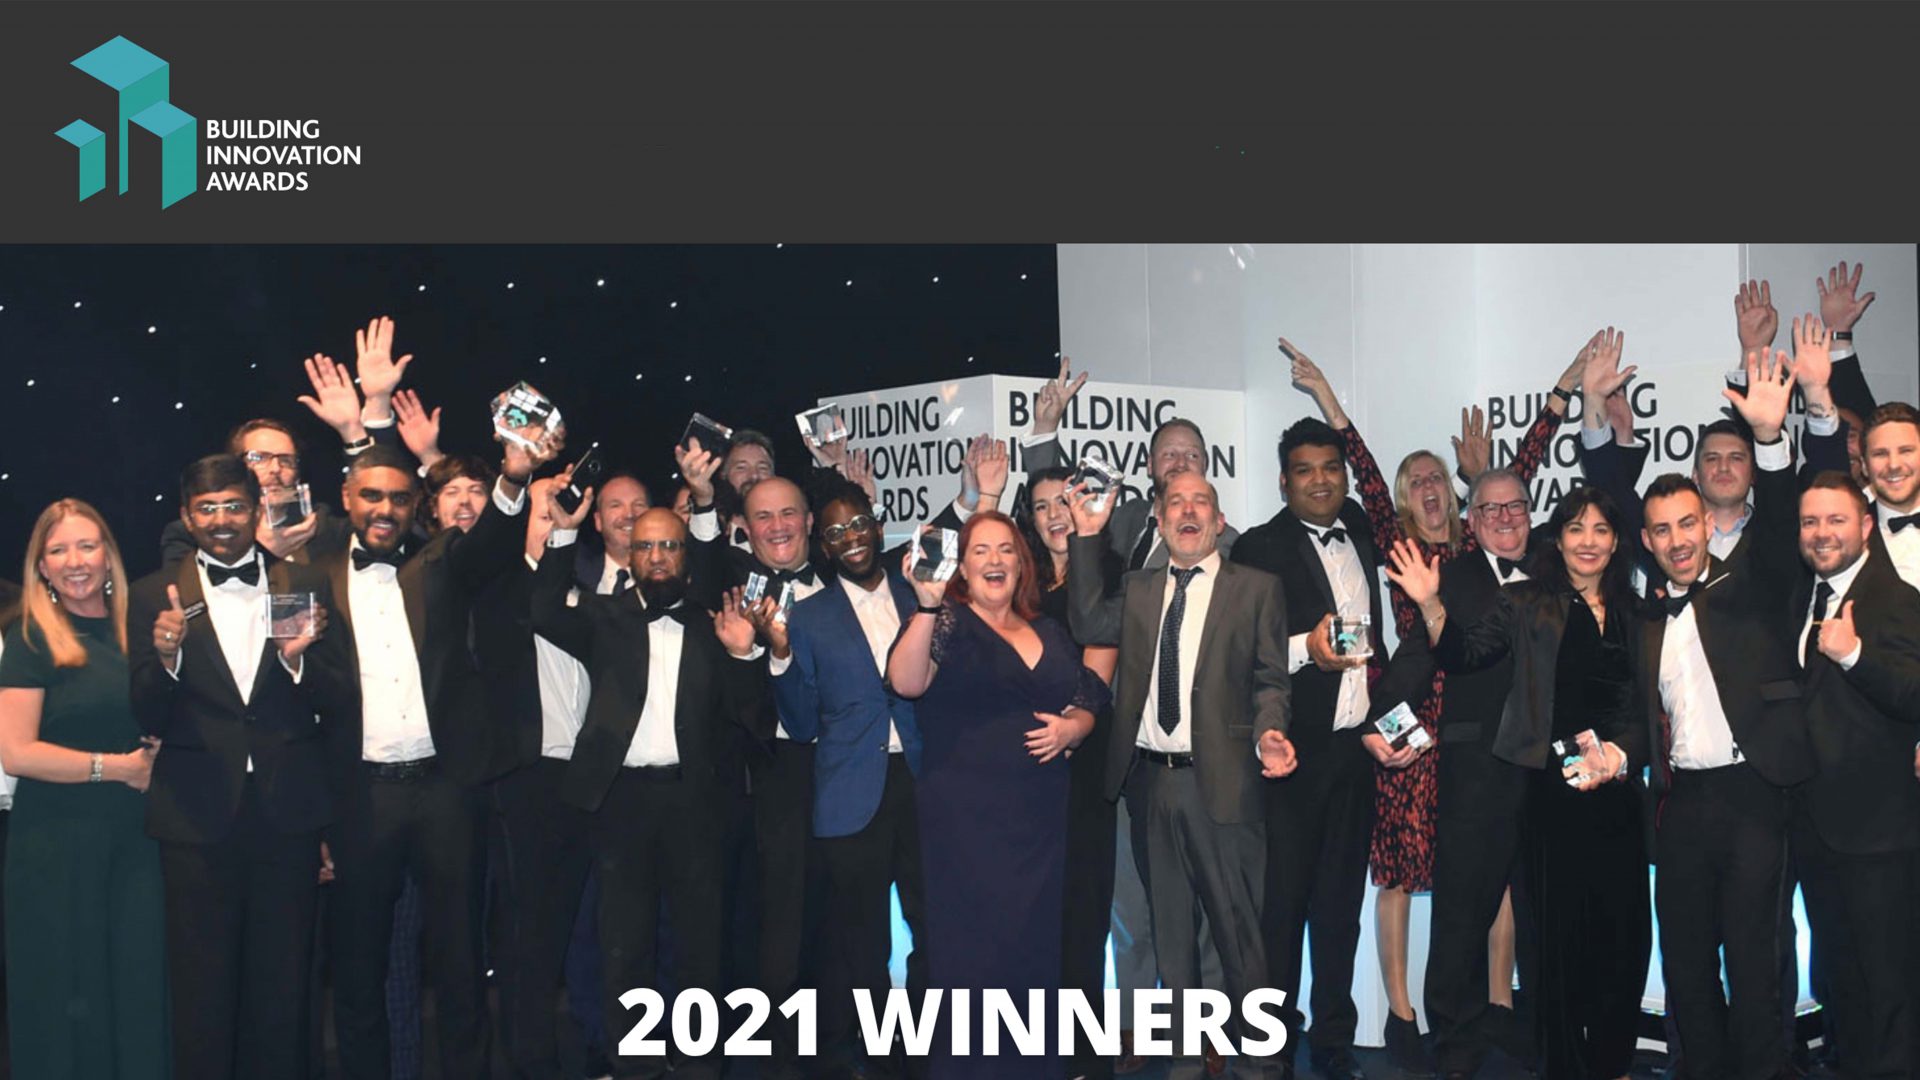 Winners of Building Innovation Awards 2021